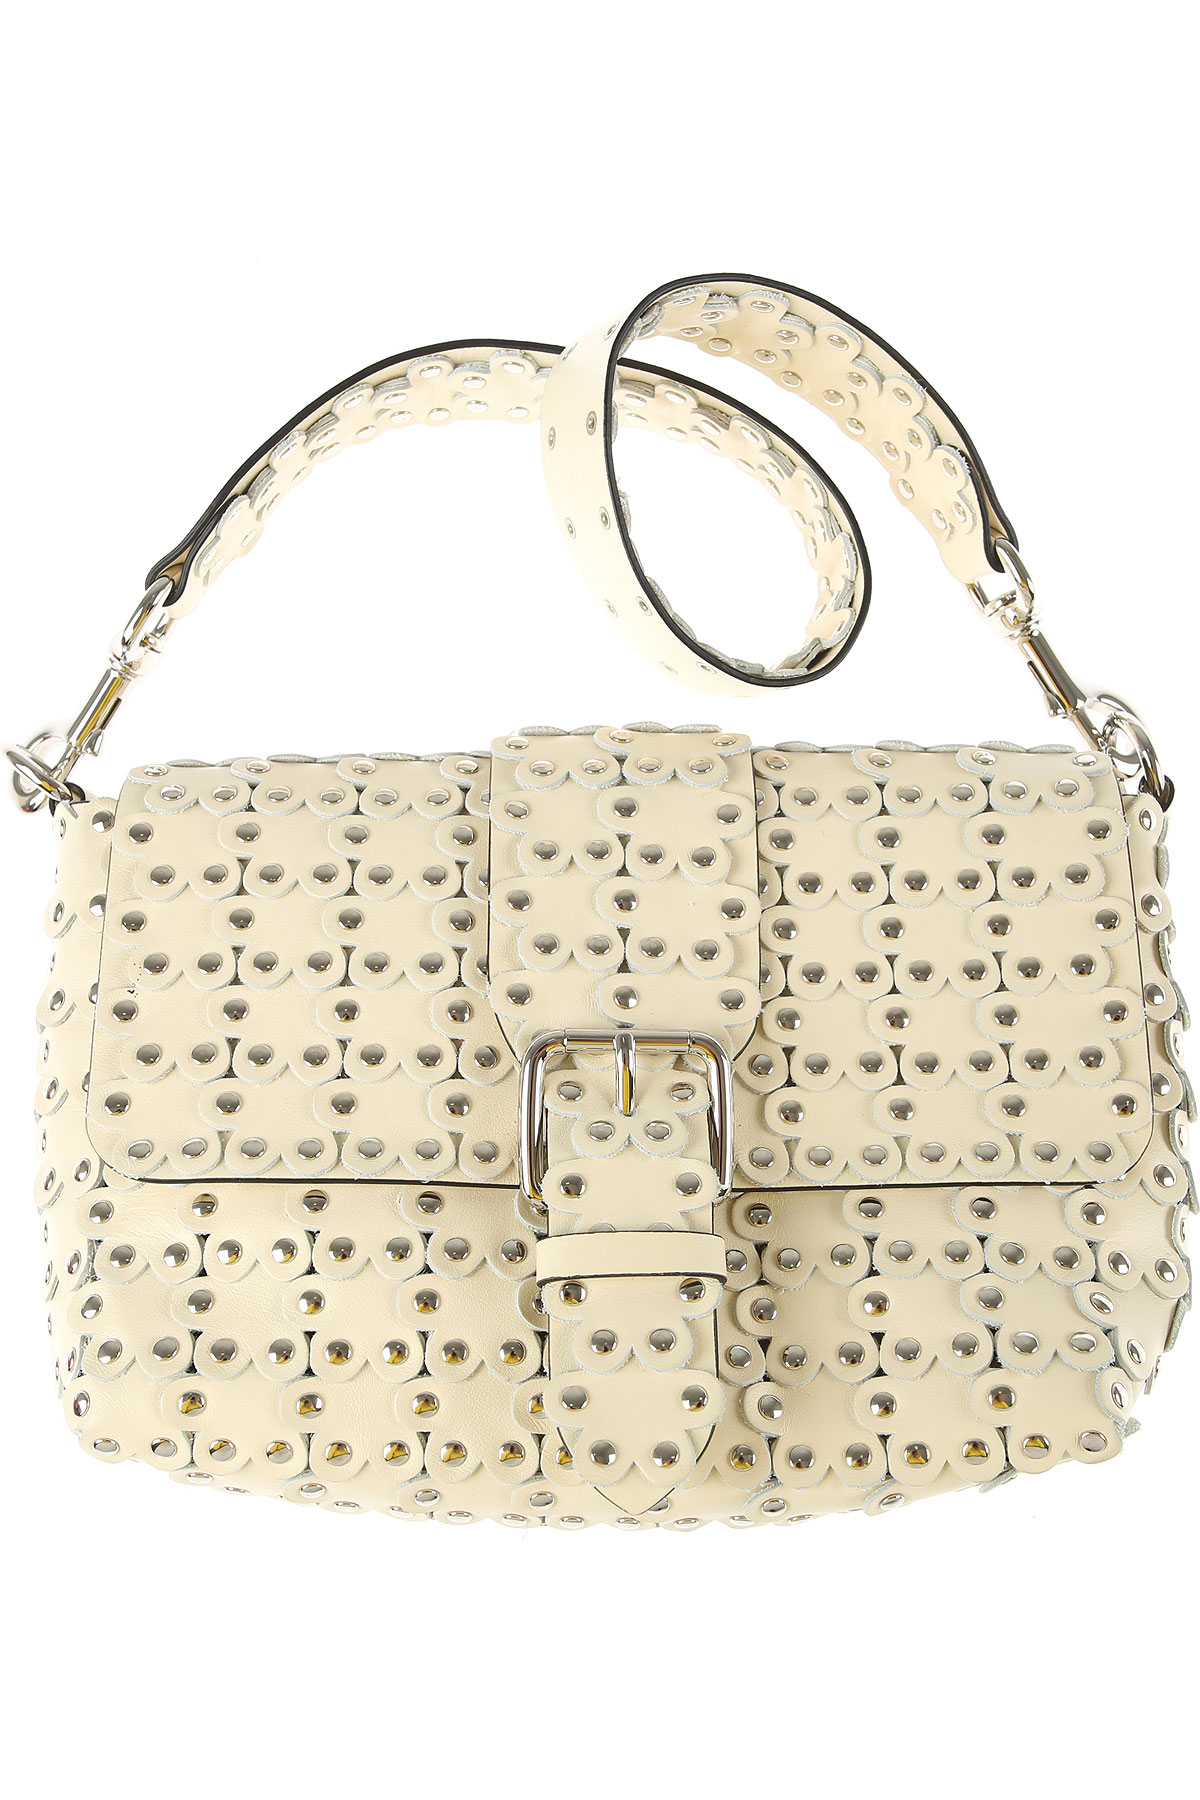 Handbags RED Valentino, Style code: pq0b0722-xiq-a03